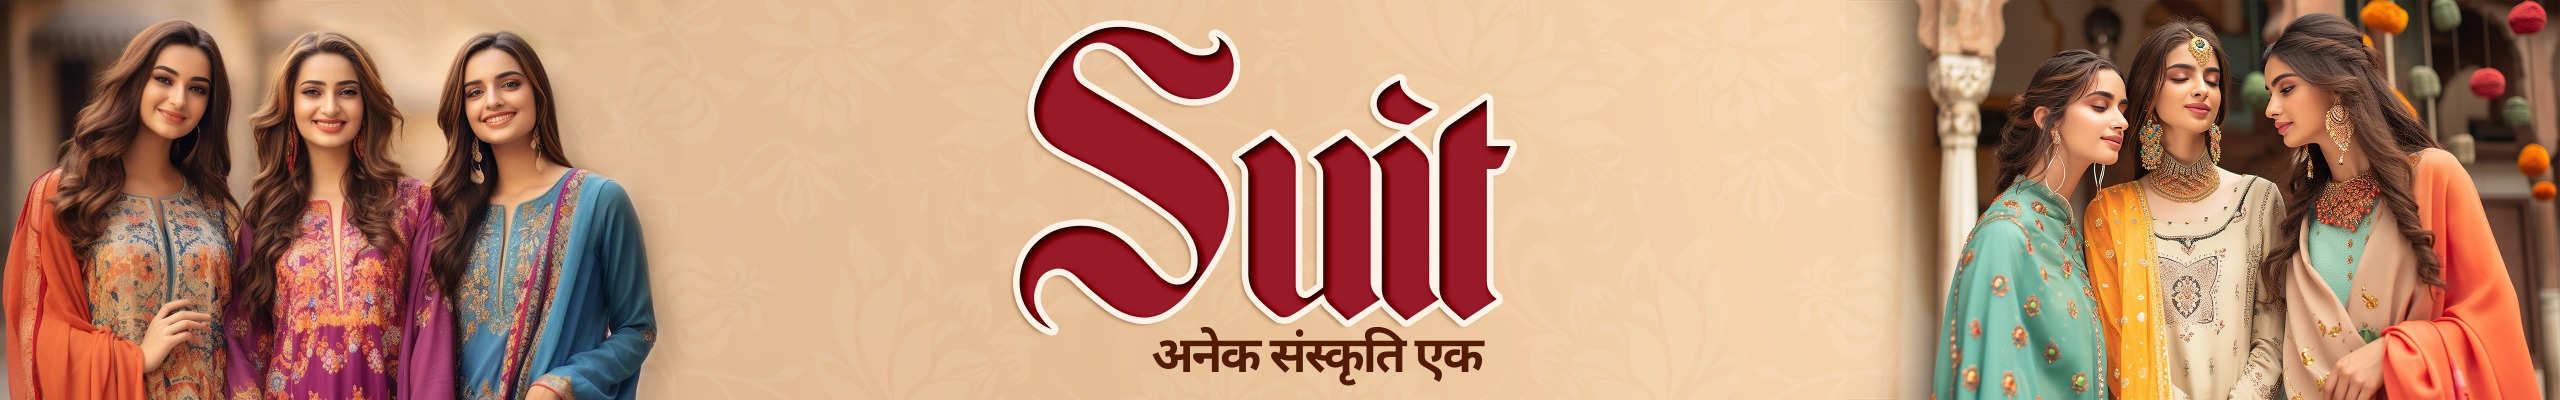 Sharara Suit Manufacturers in Gujarat